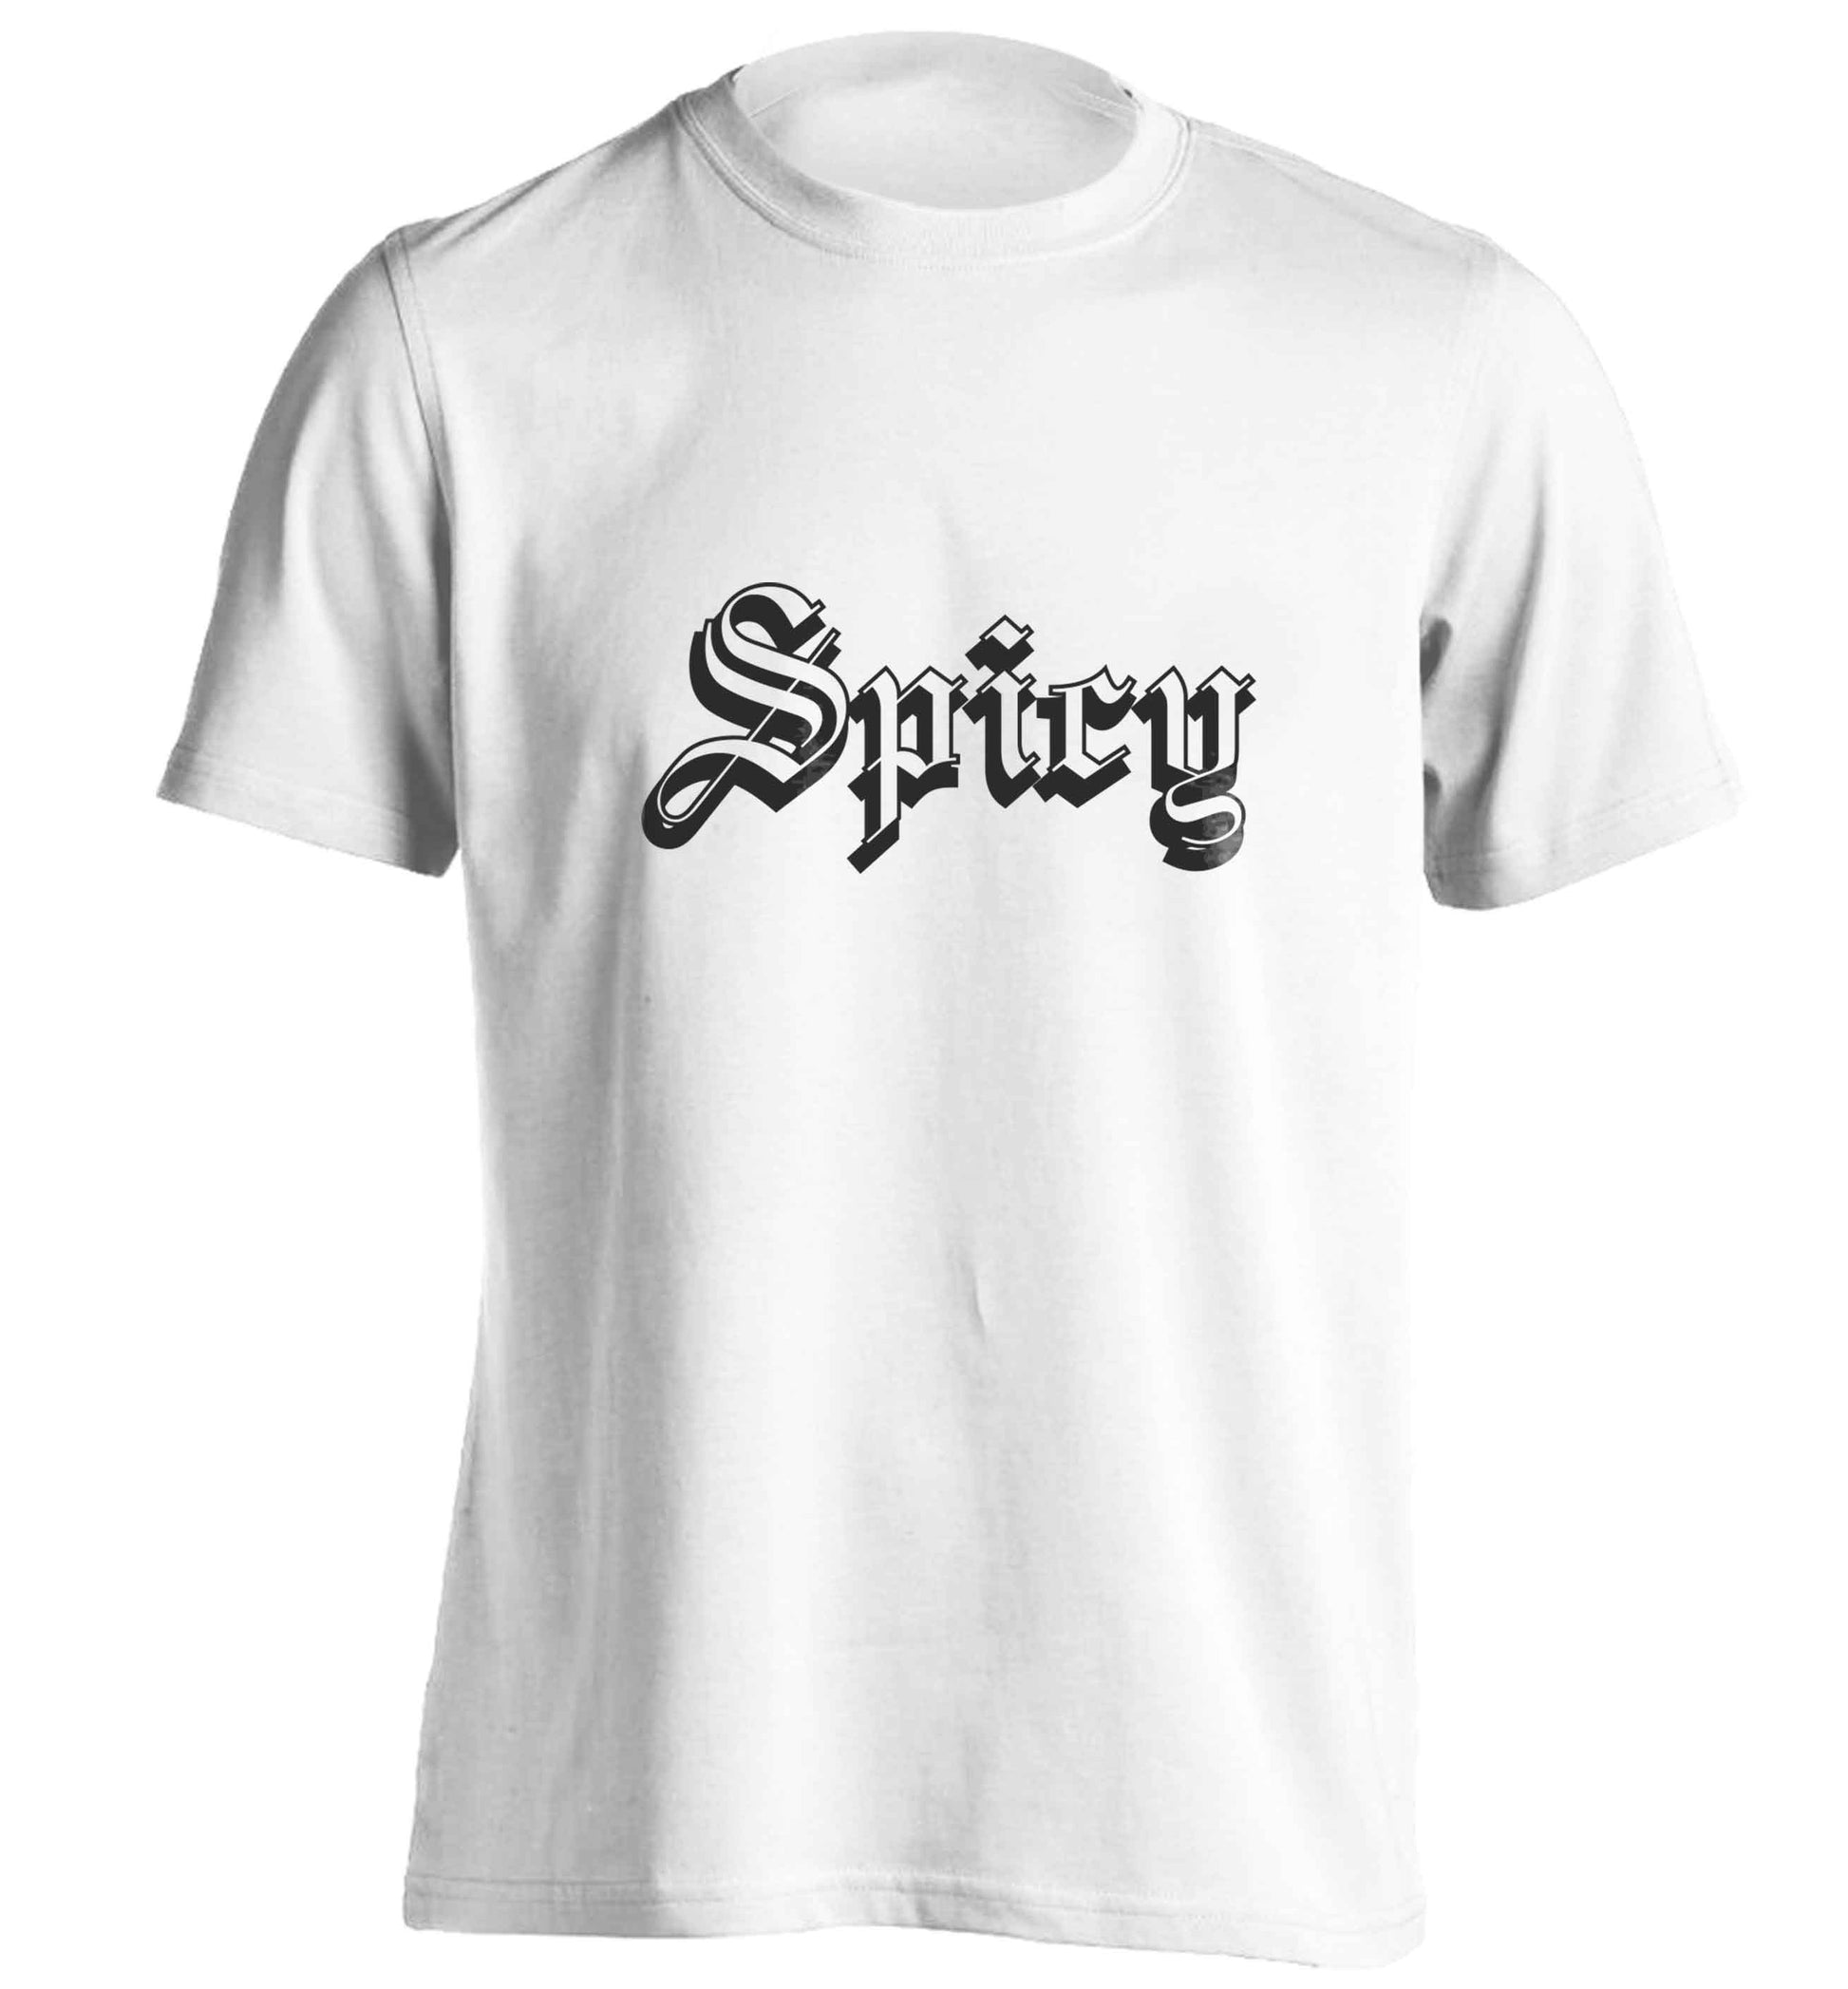 Spicy adults unisex white Tshirt 2XL